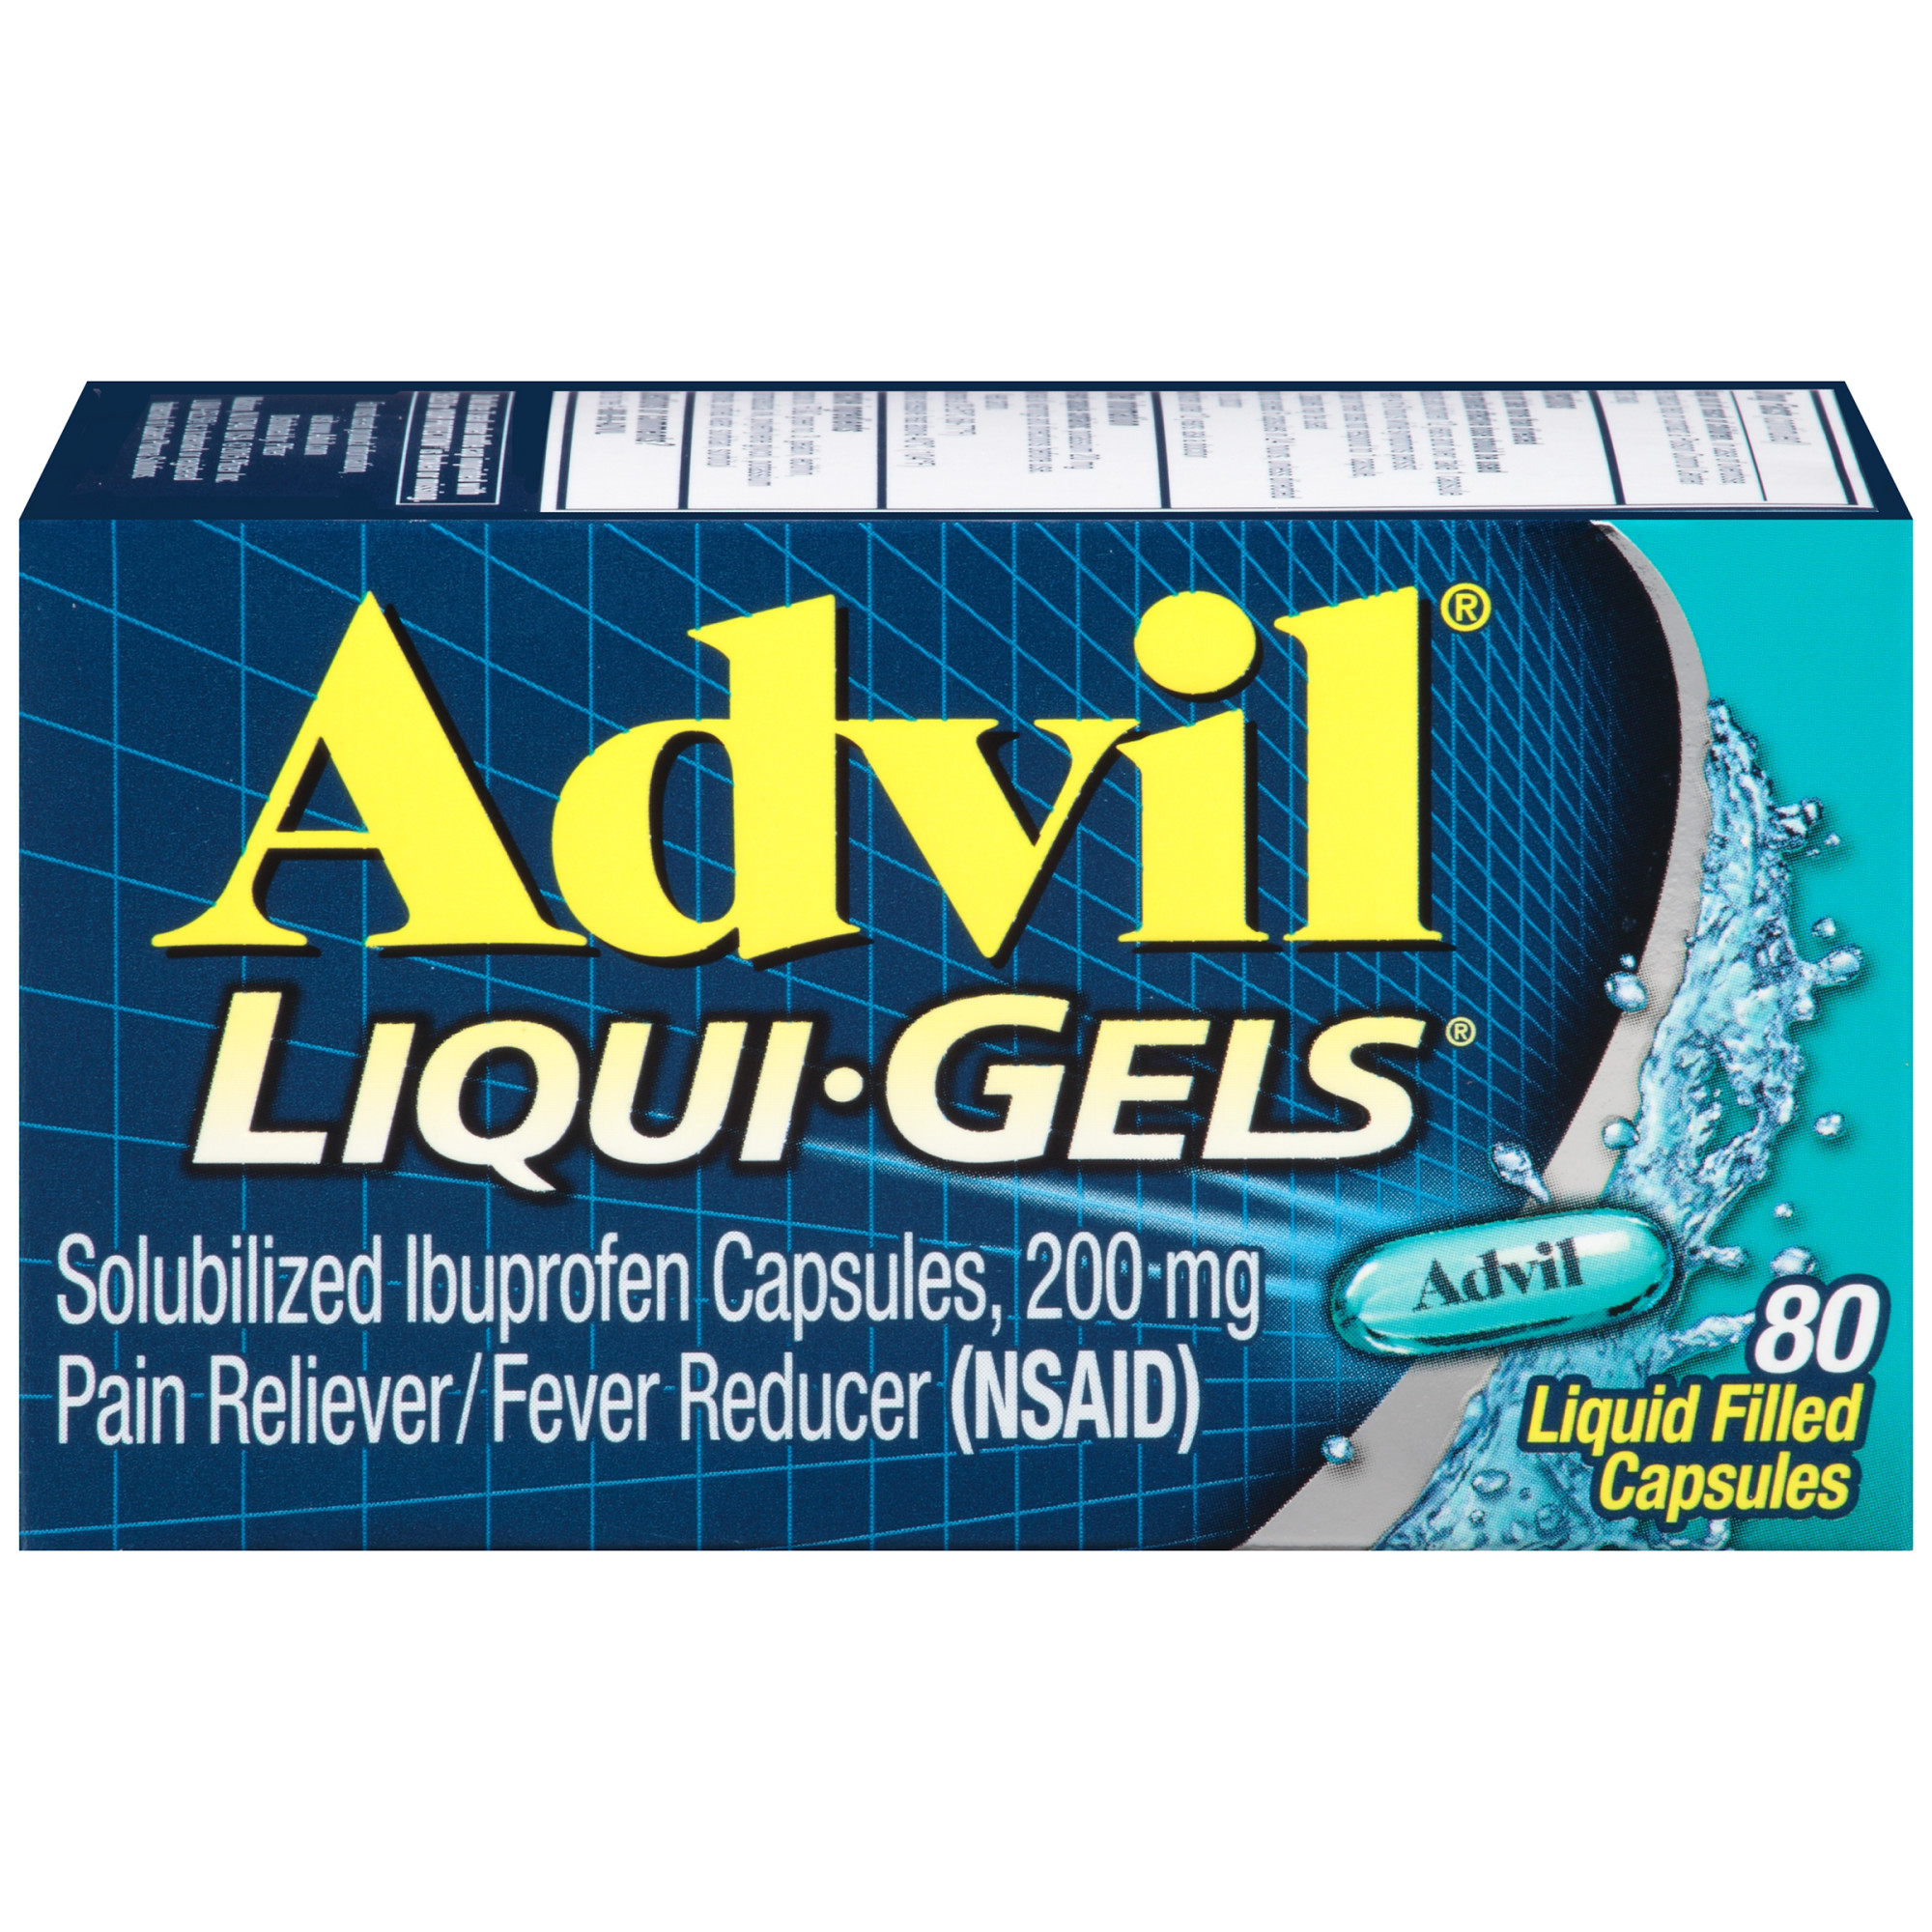 Advil Liqui-Gels Pain and Headache Reliever Ibuprofen, 200 mg Liquid Filled Capsules, 80 Count - image 1 of 9